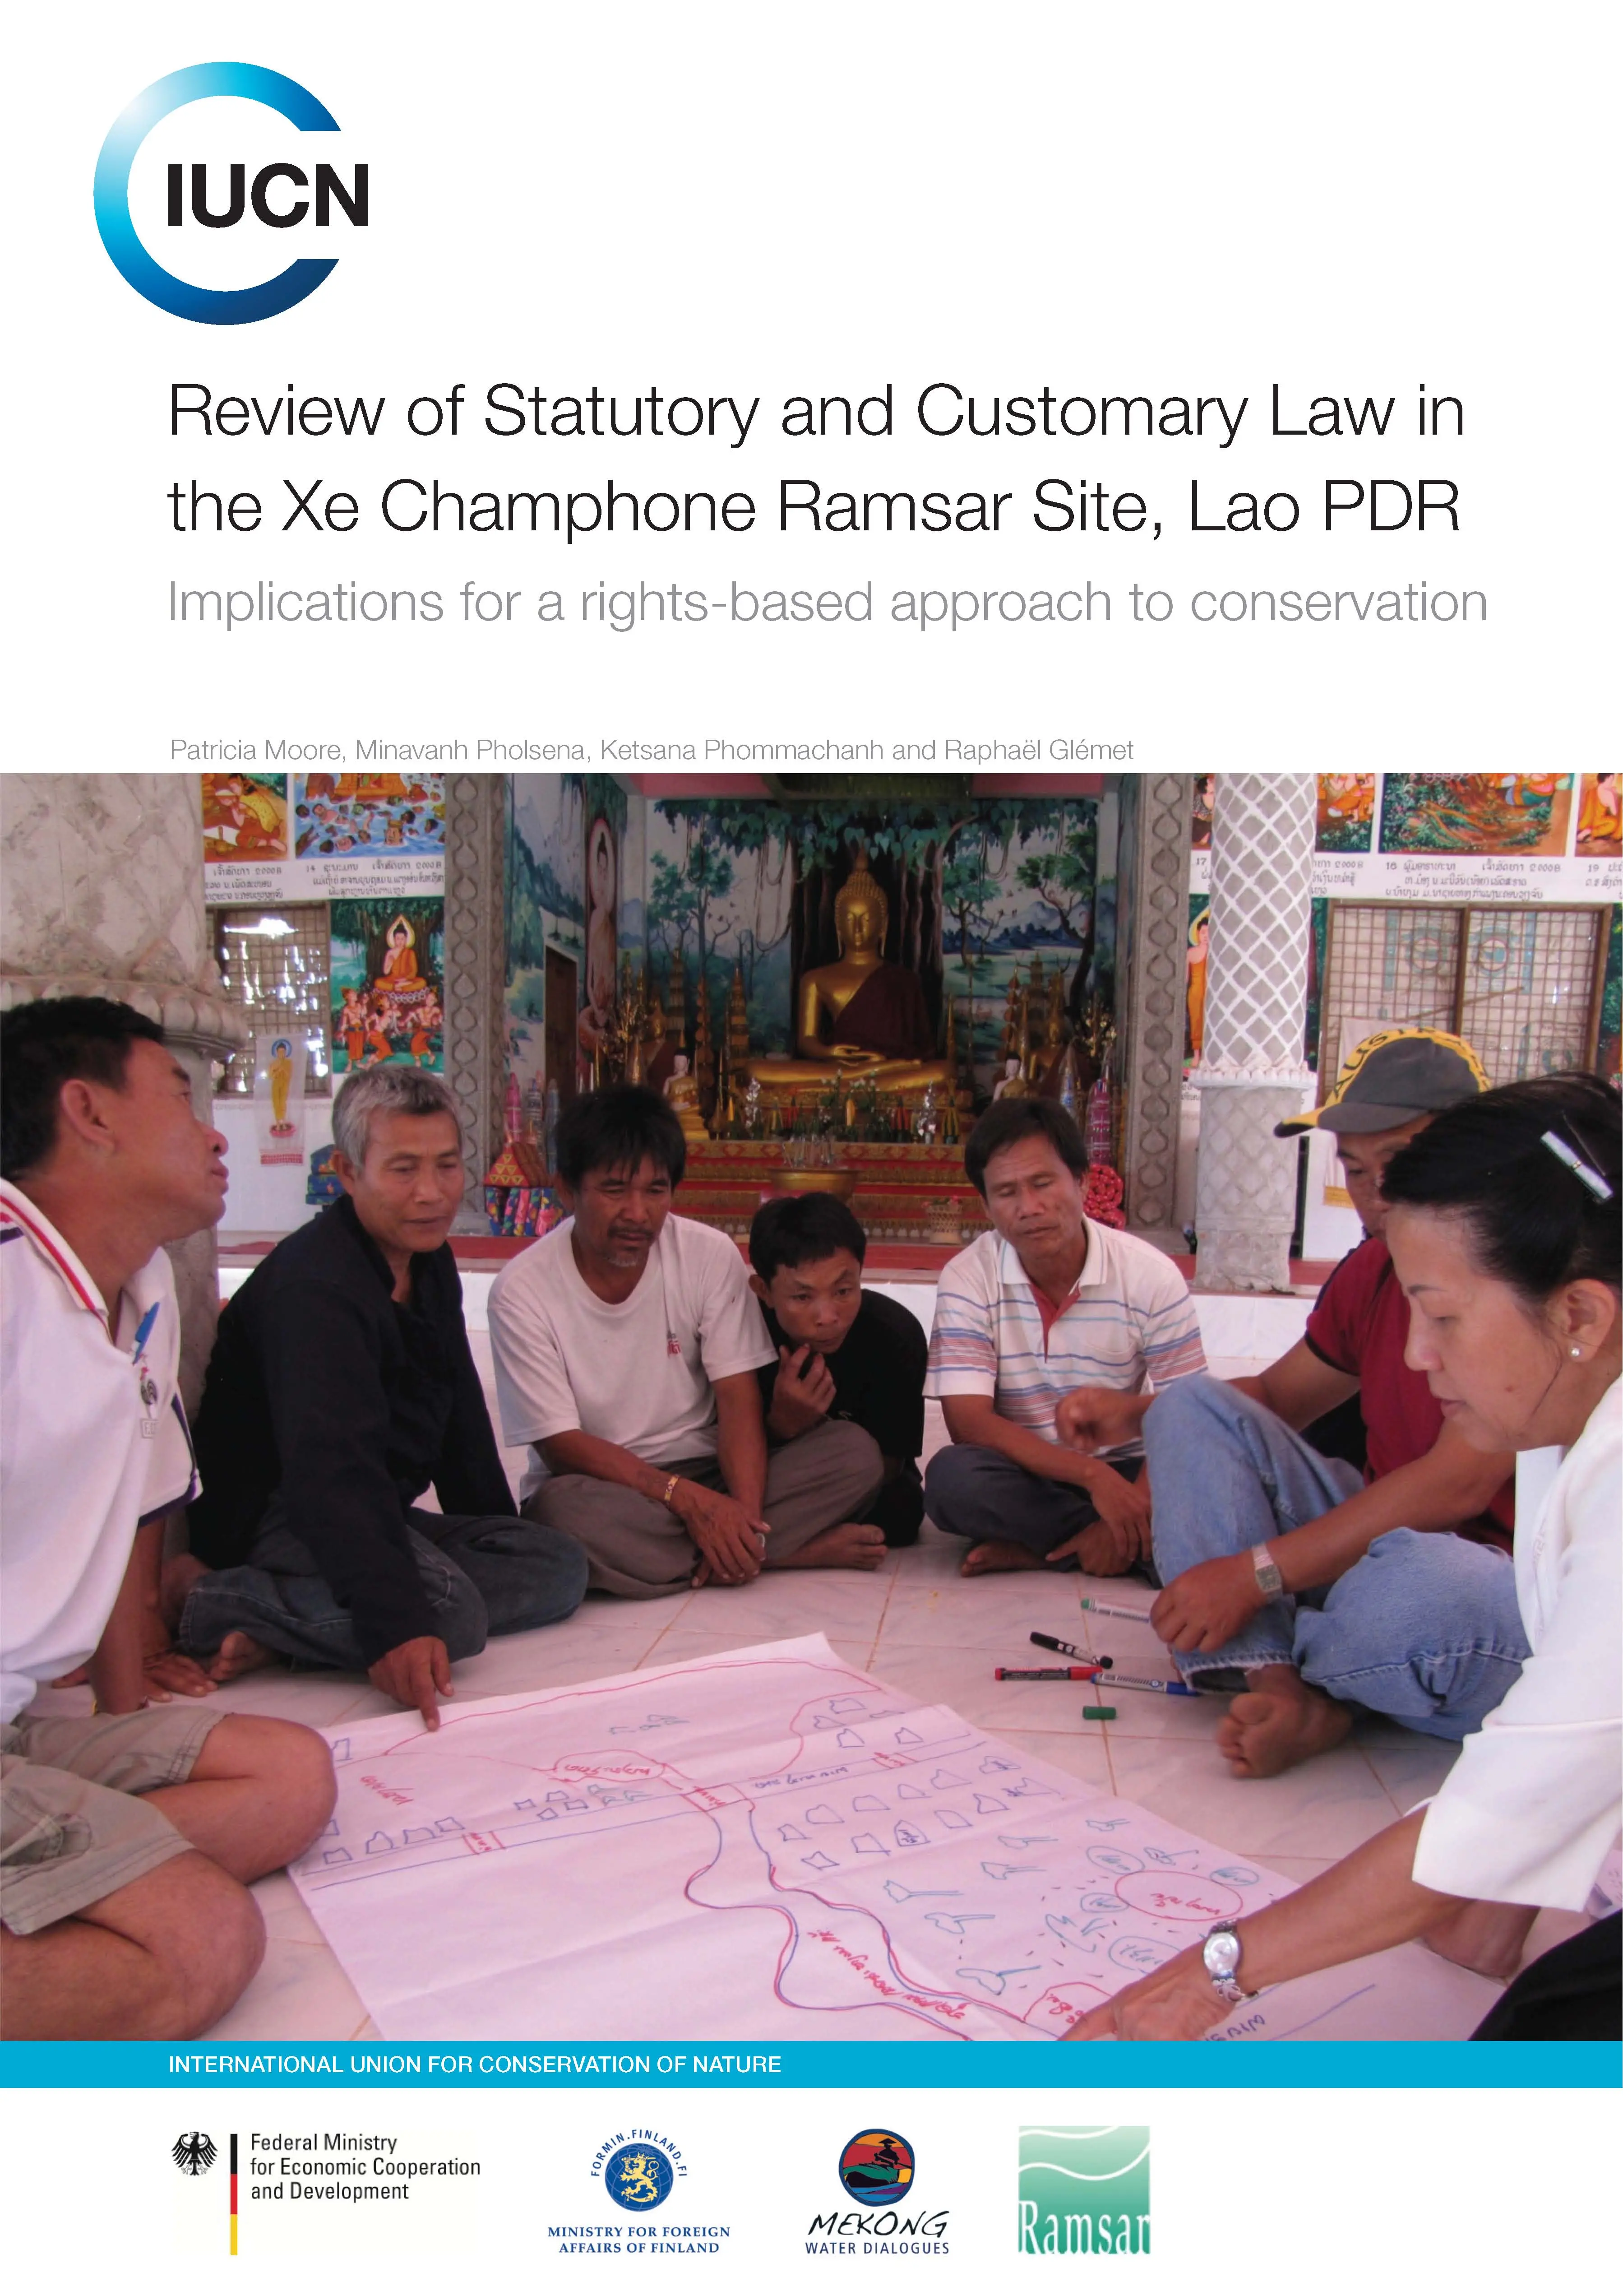 Community workshop on Customary Law, Taleo village, Lao PDR